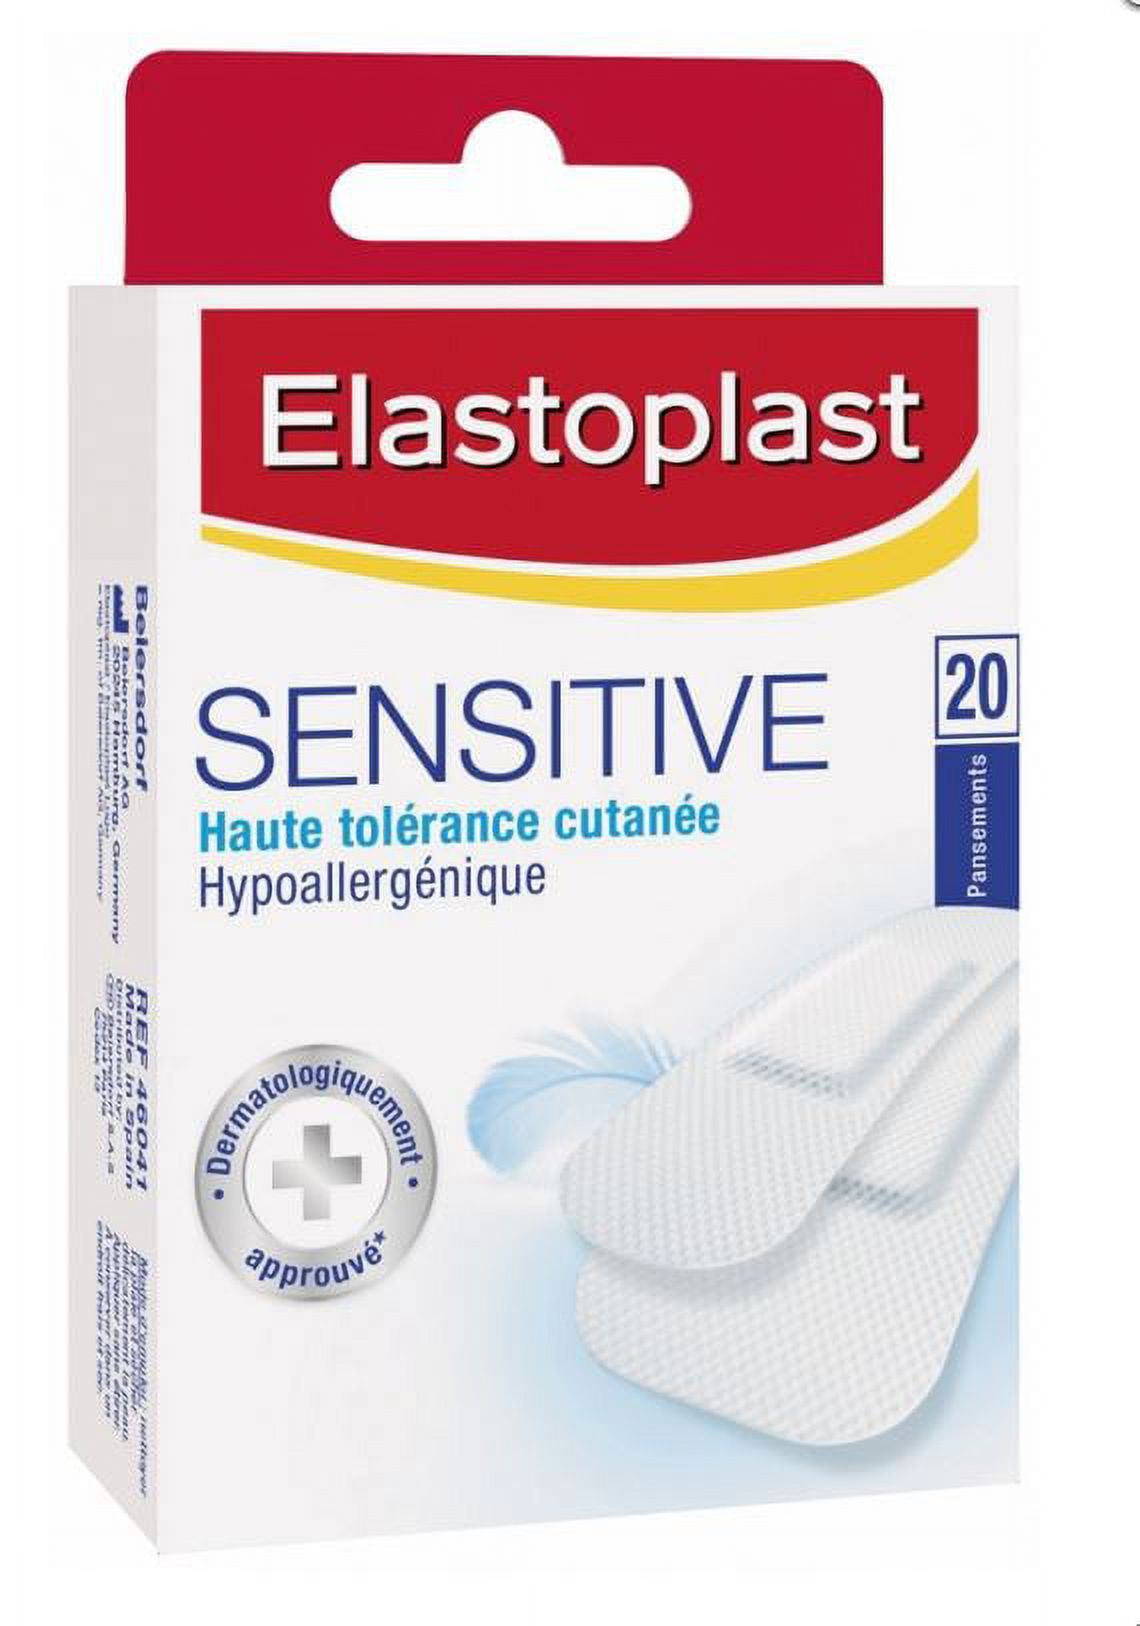 Elastoplast Sensitive Strip 20 Strips - image 1 of 1